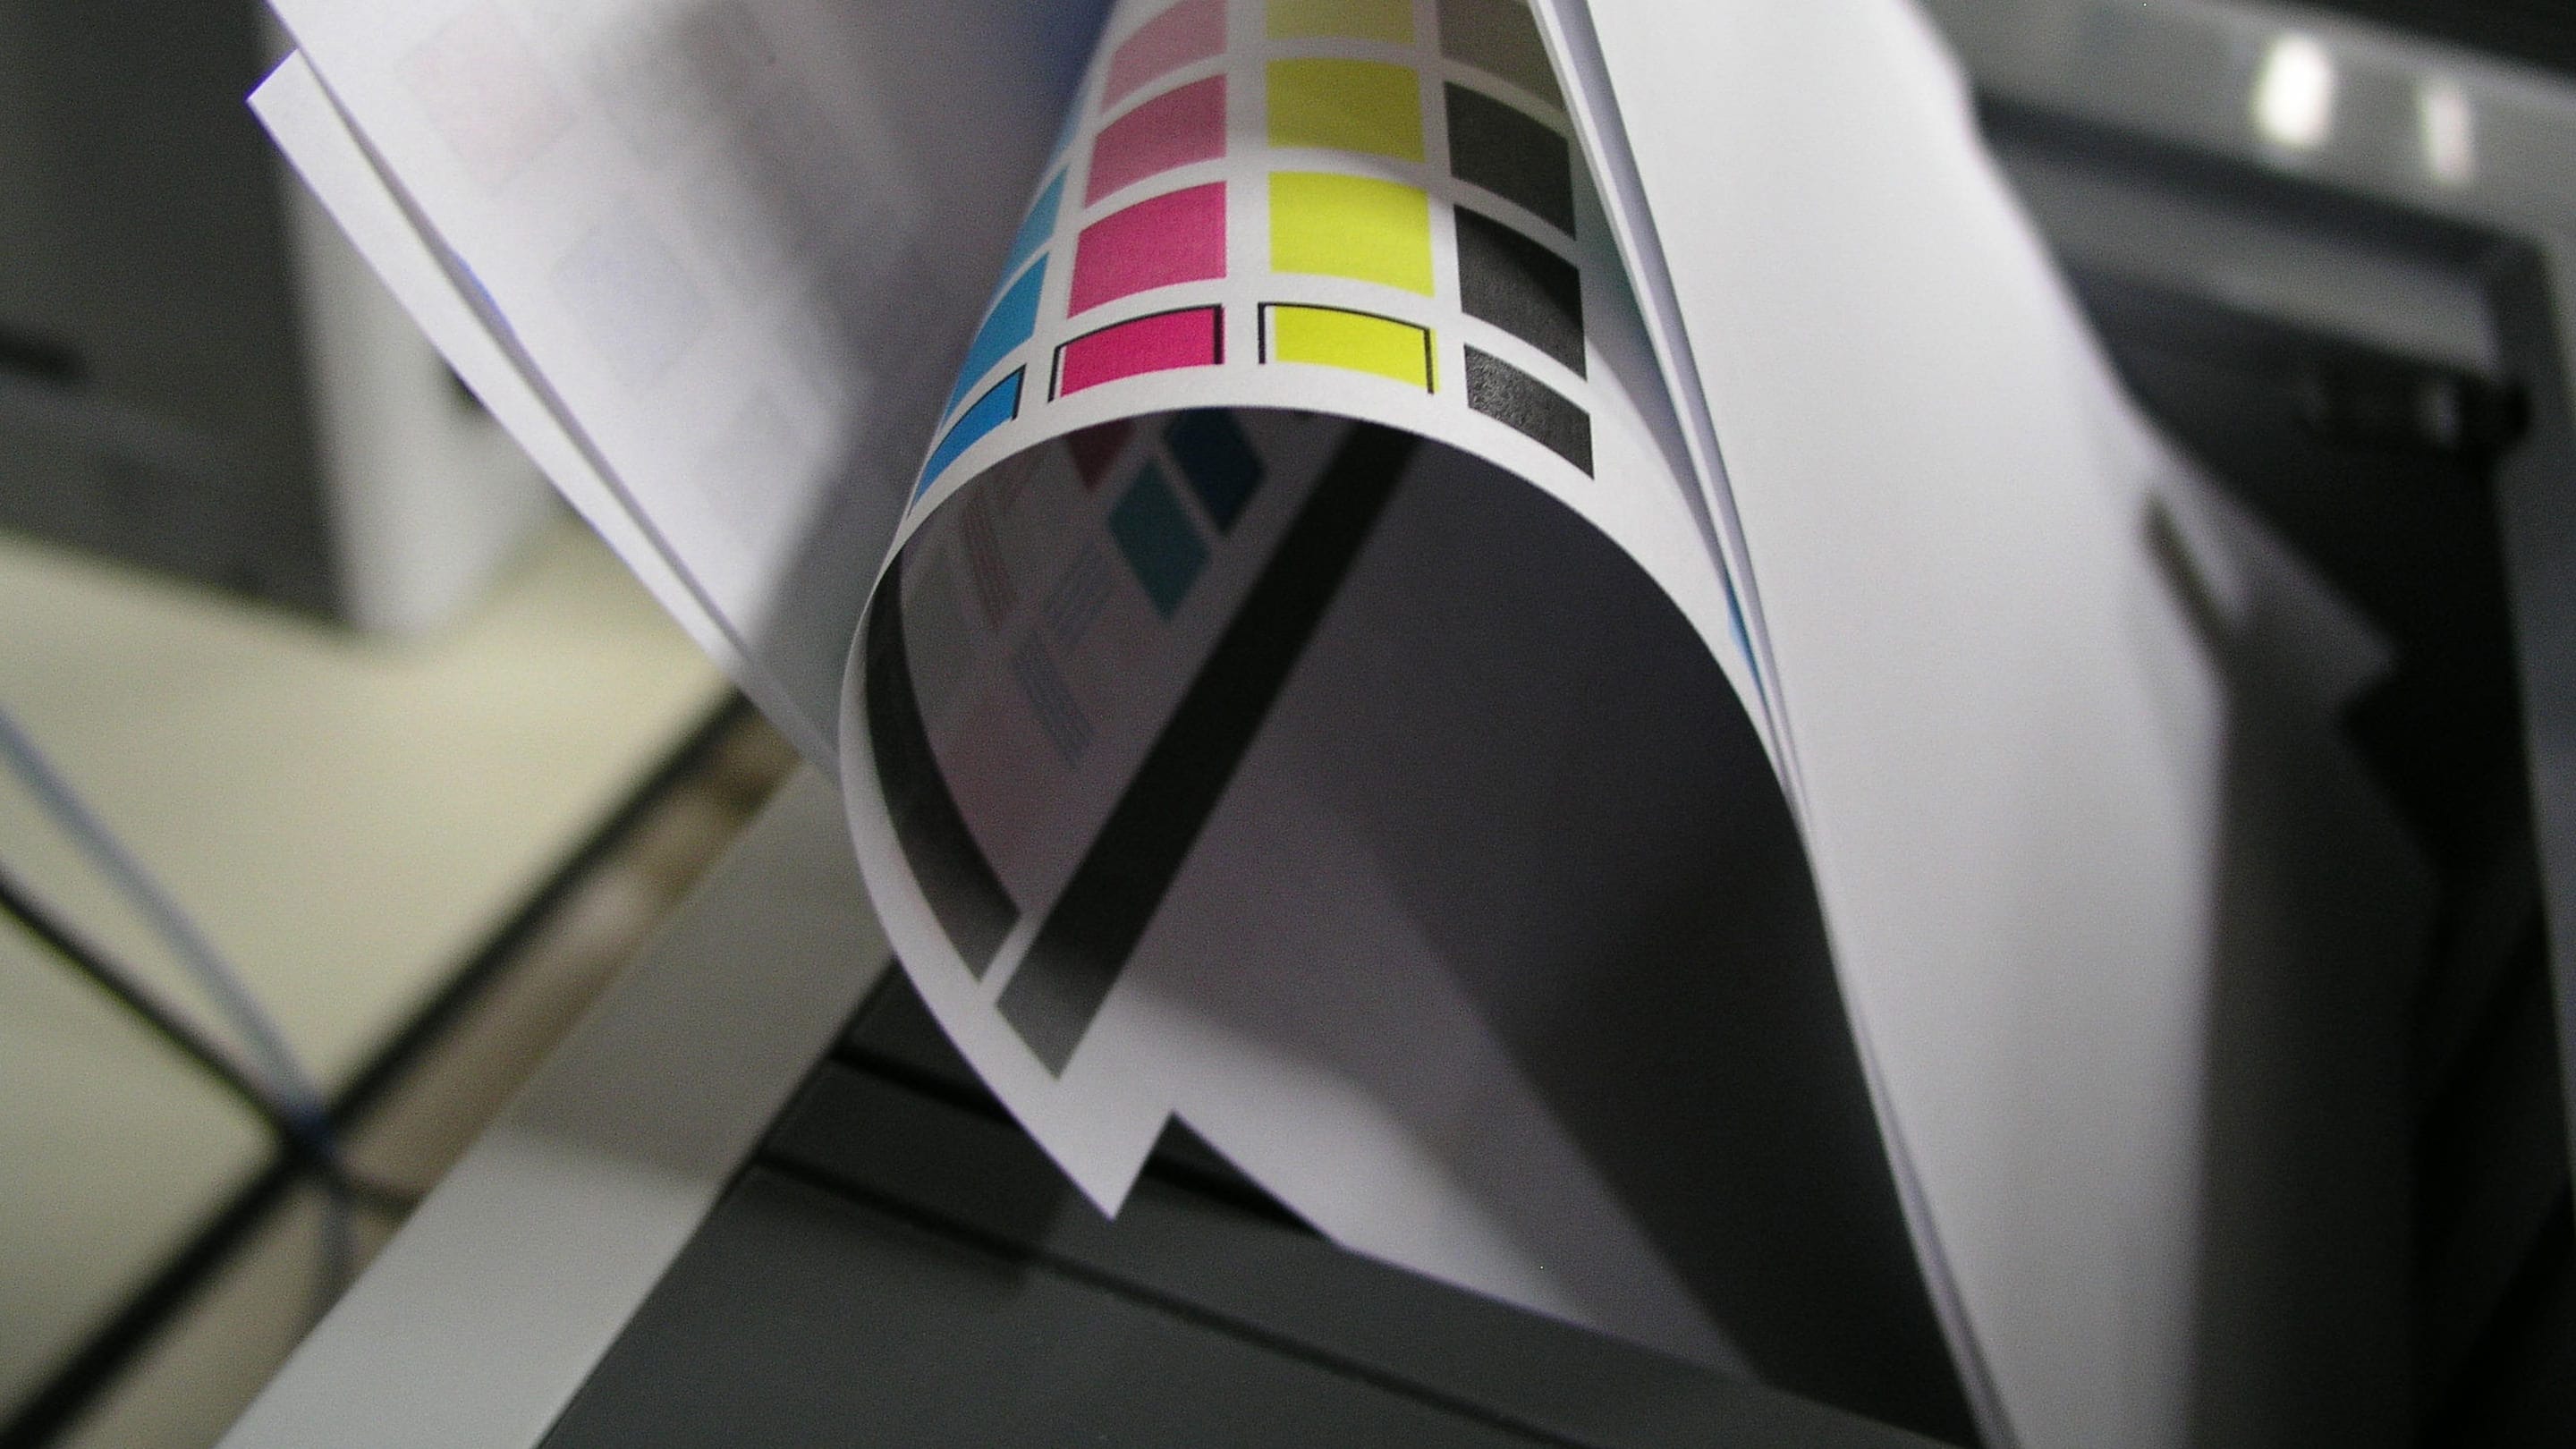 Printer Repairs - Tips for Avoiding Paper Jams